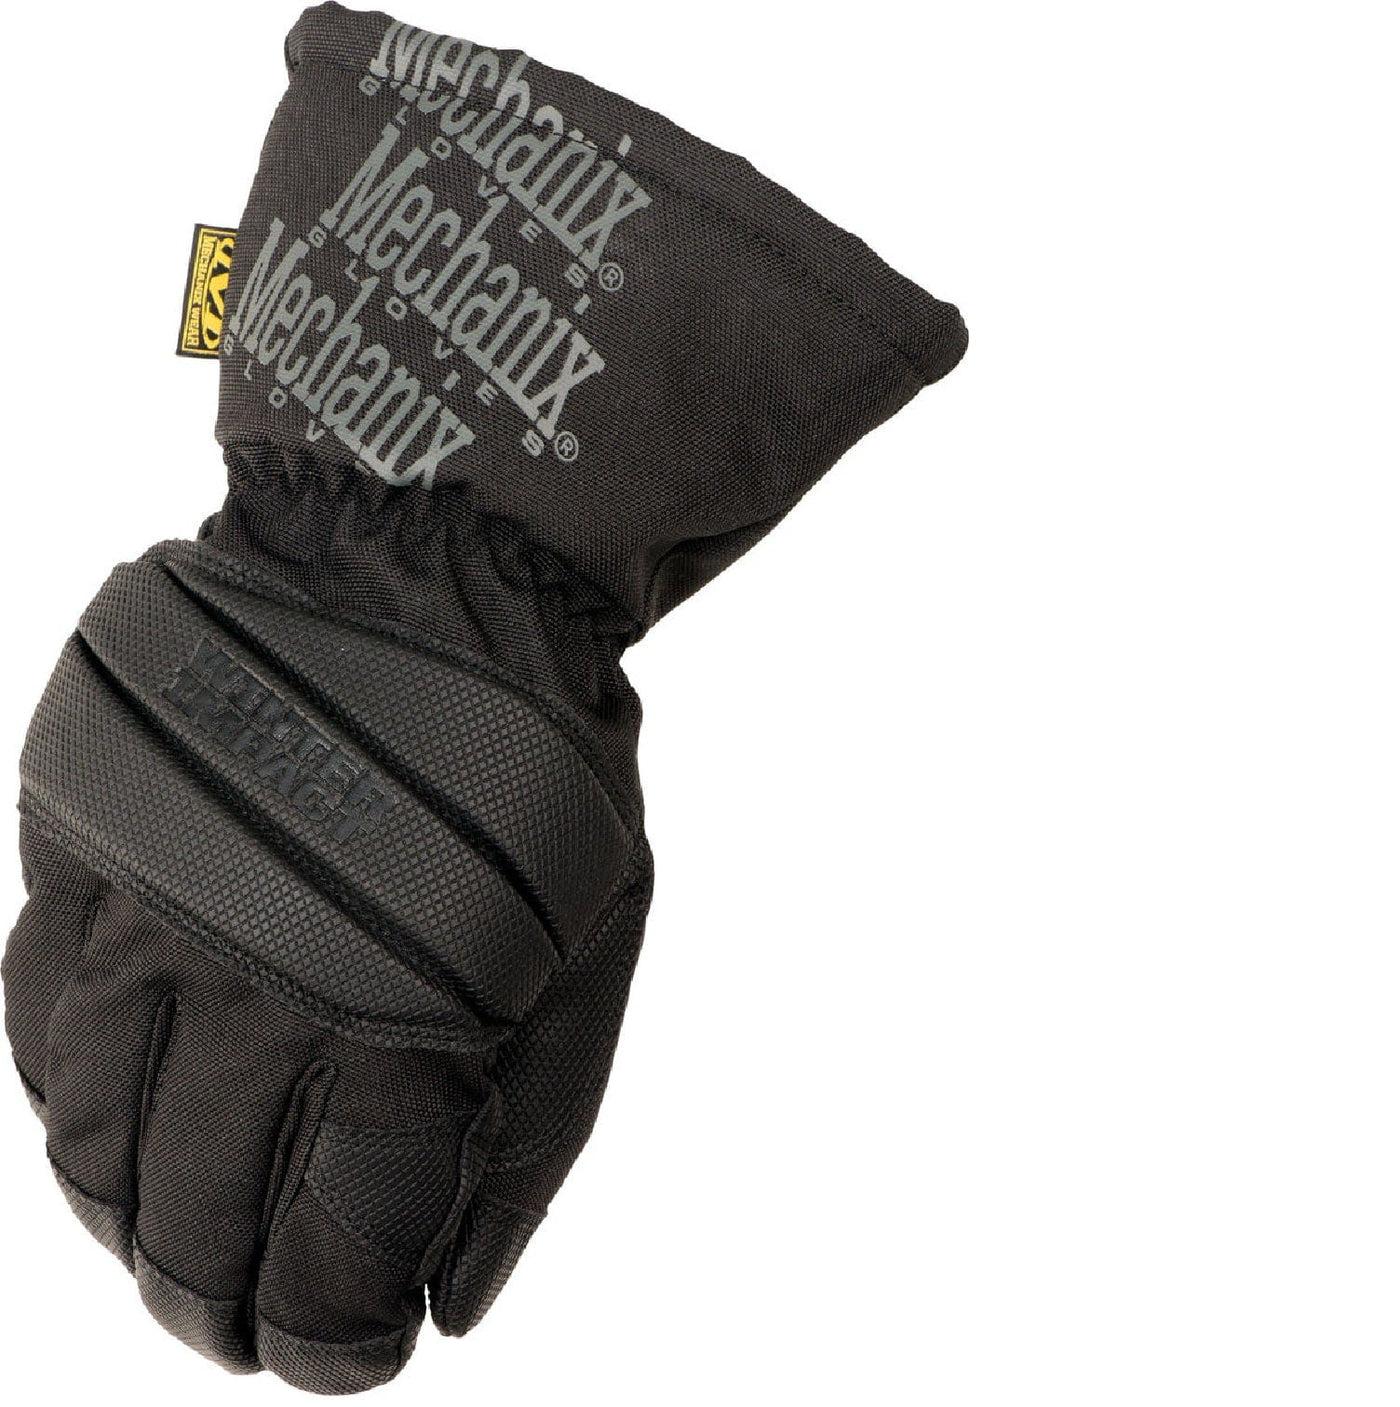 Mechanix Wear Mechanix Winter Impact Glove Black Small Apparel